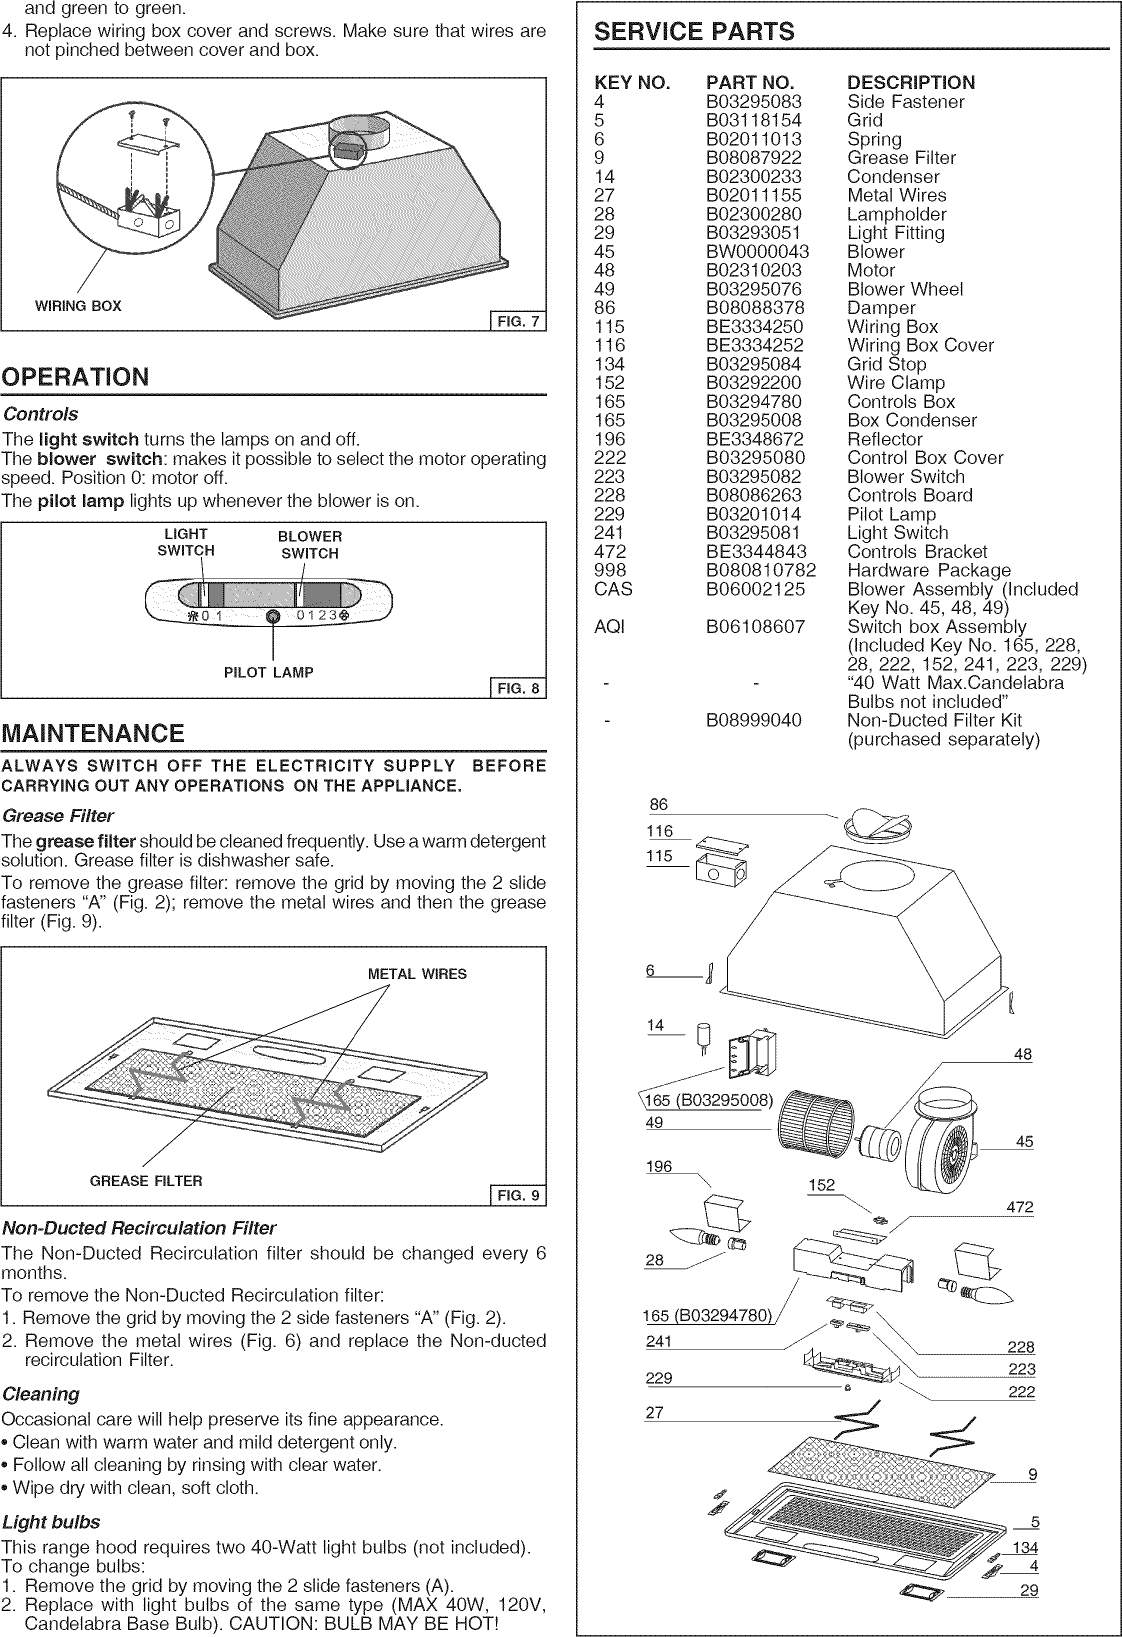 Page 3 of 8 - BROAN  Range Hood Manual L1002445